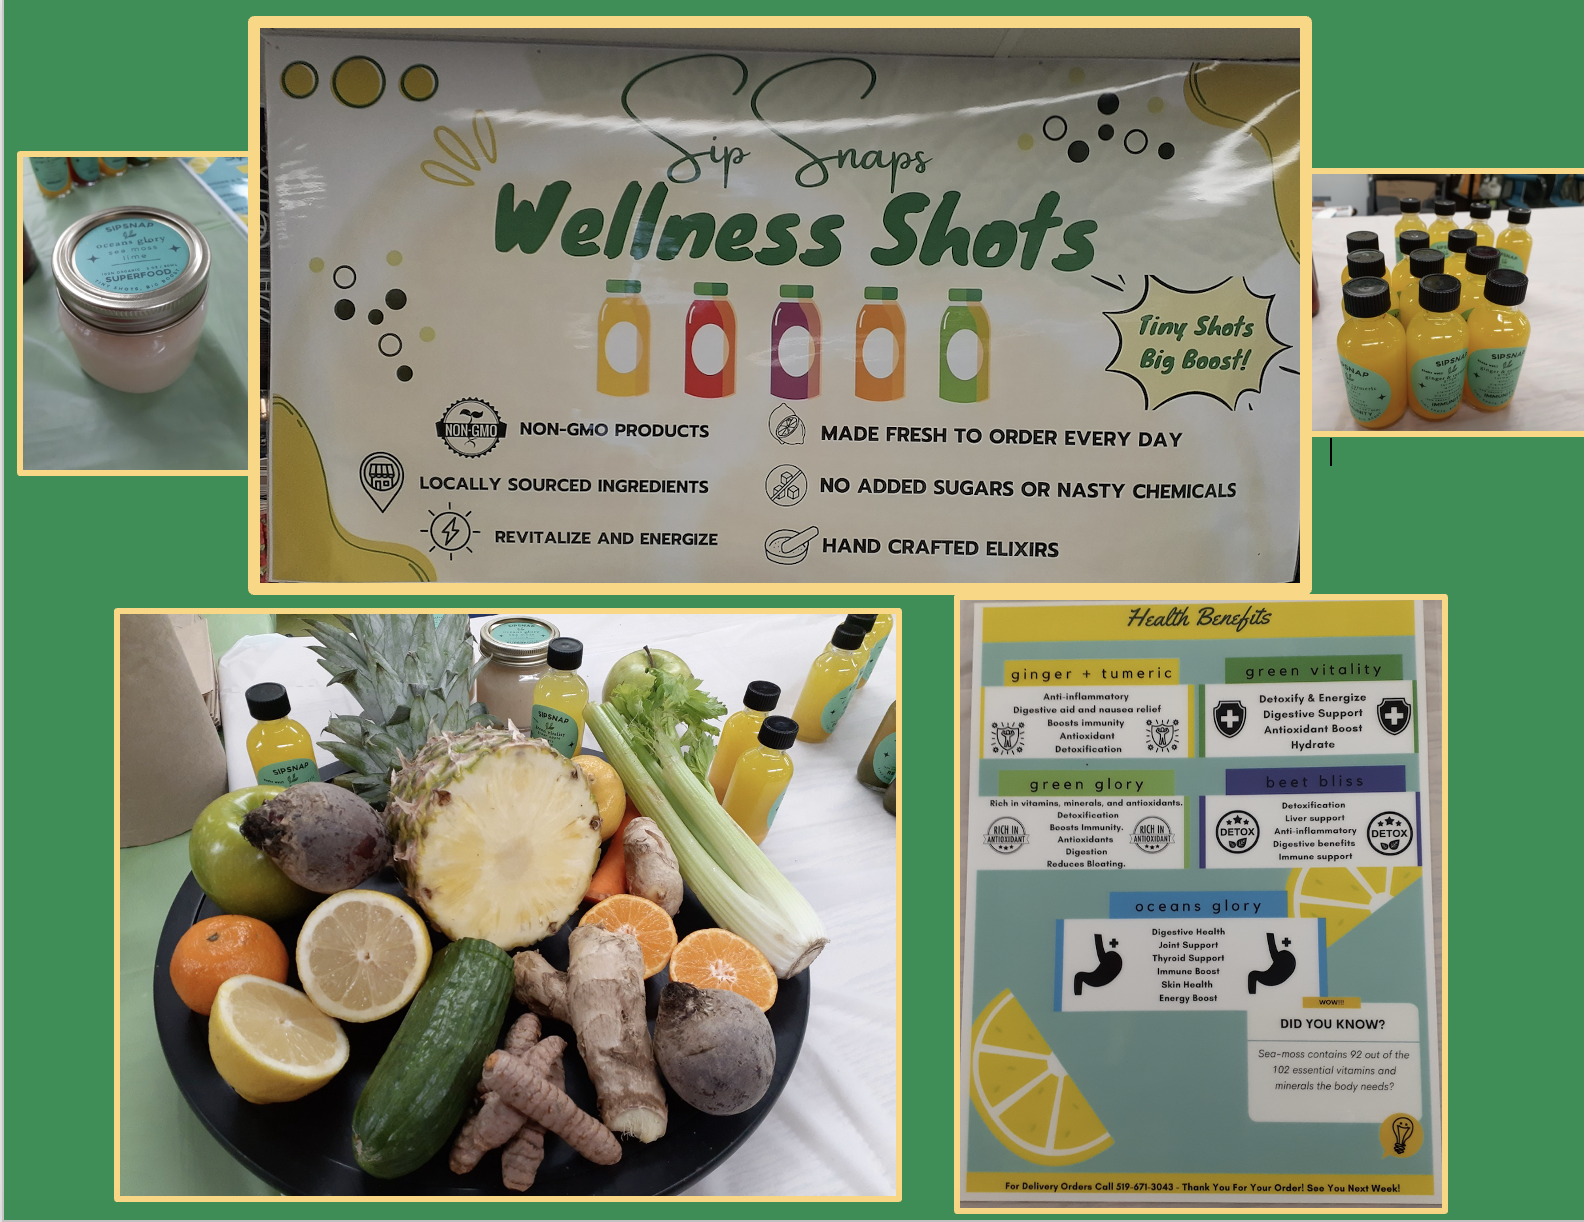 sip snaps wellness shots composite